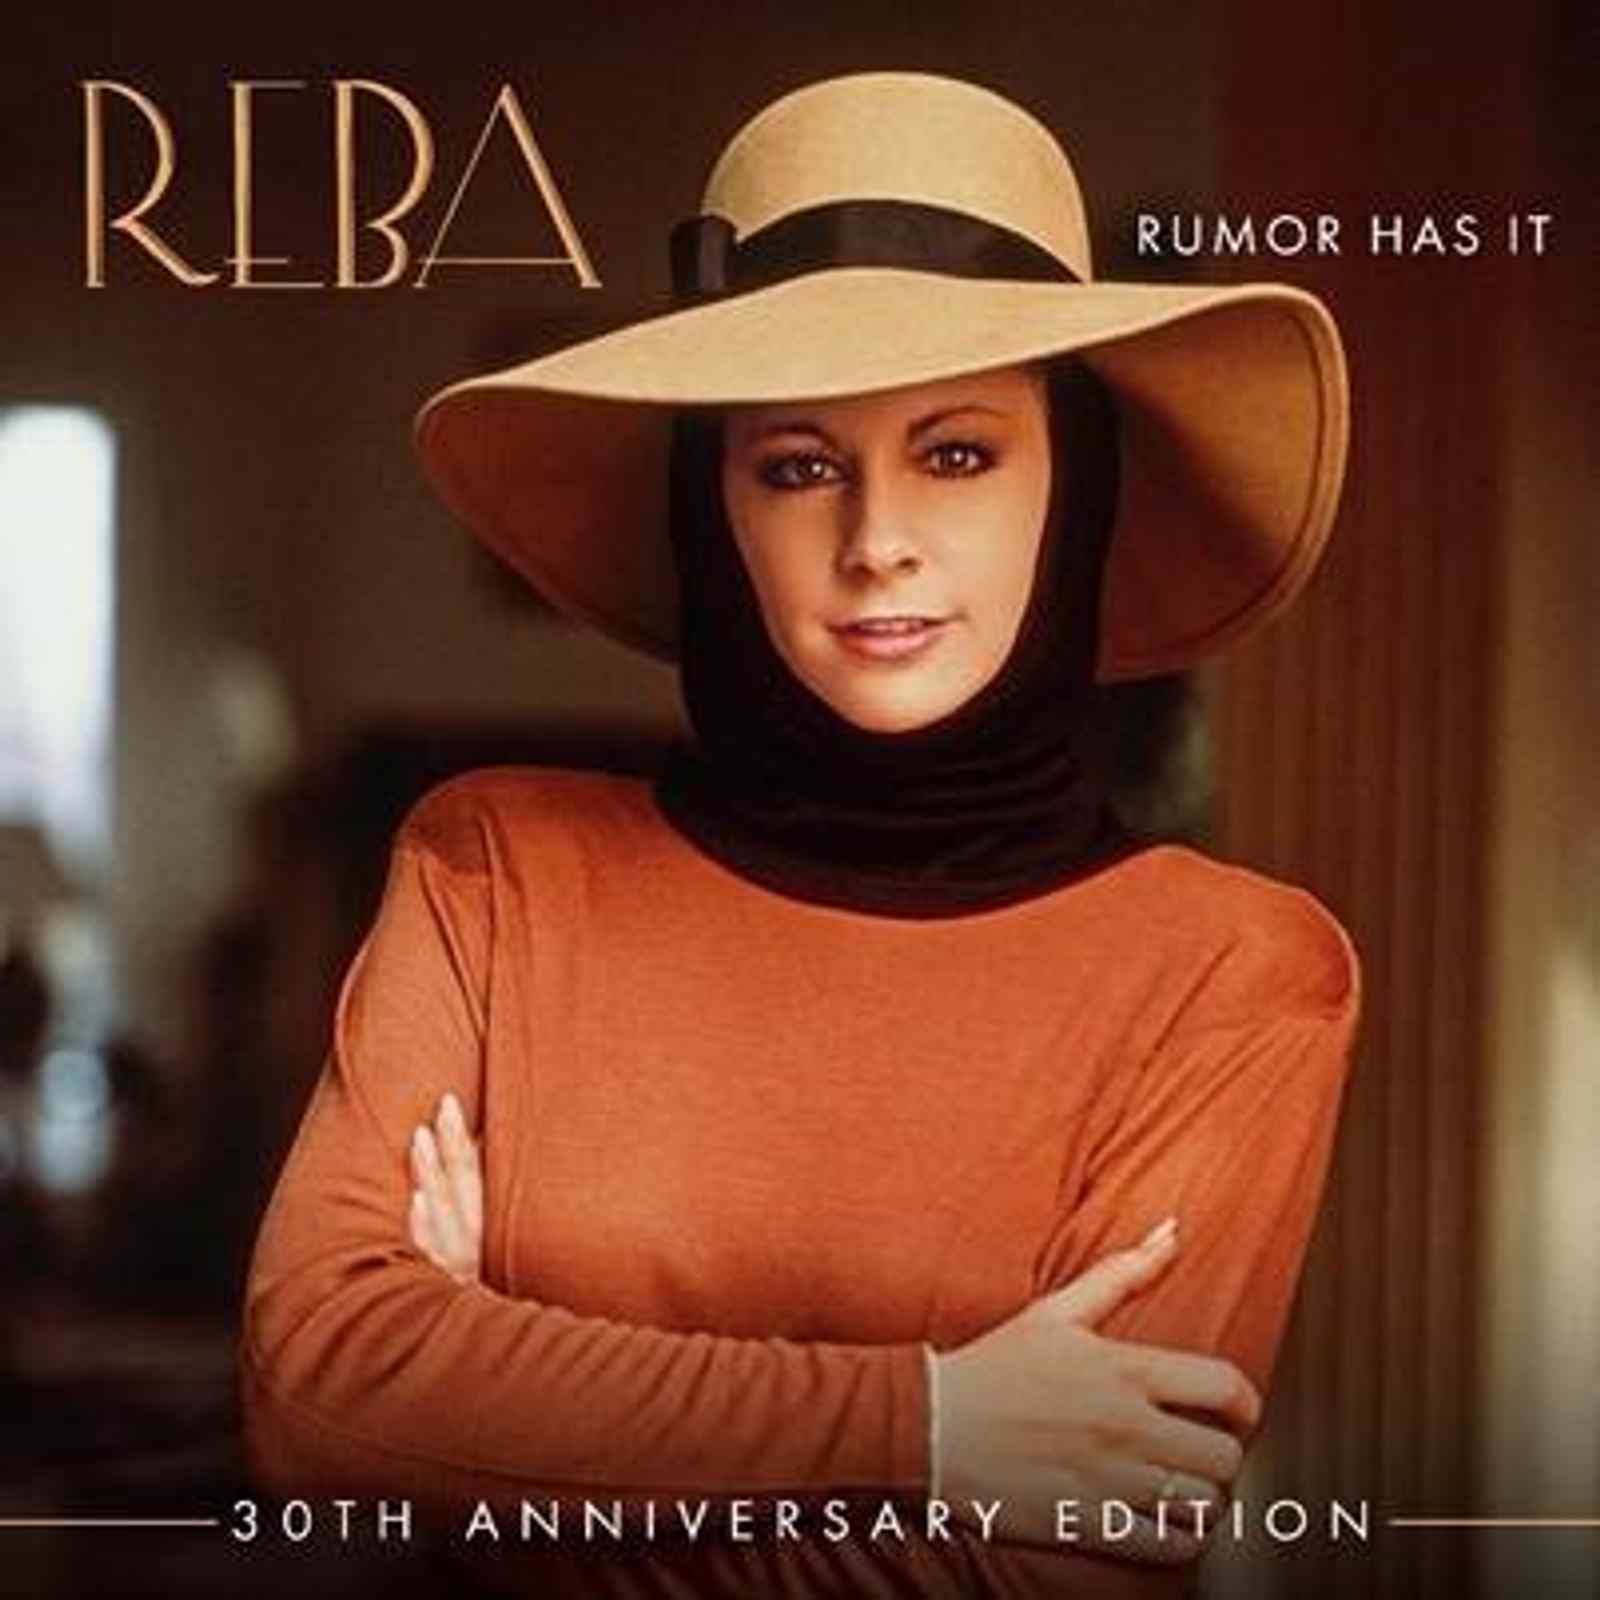 Rumor Has it (30th Anniversary Edition) by Reba McEntire